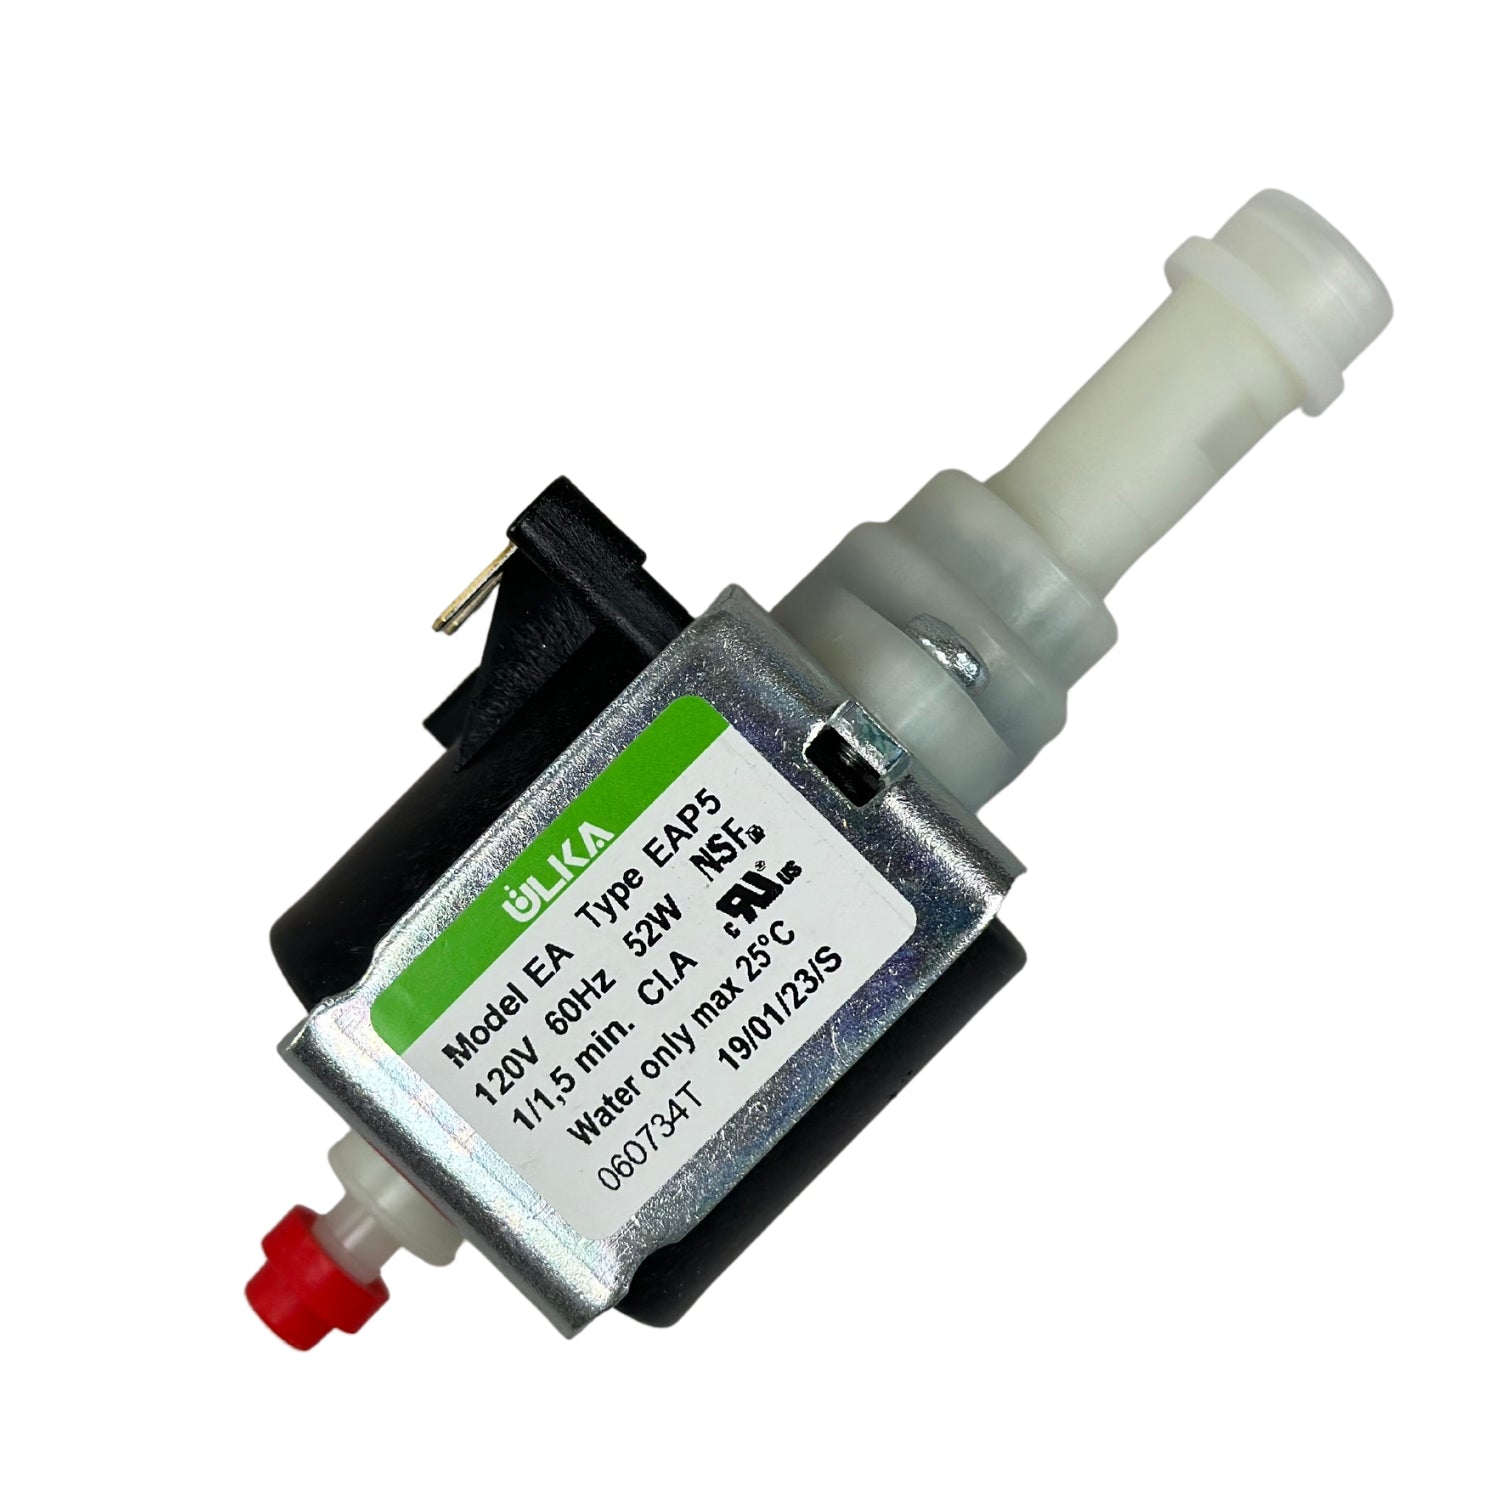 Ulka Vibration Pump EAP5/s - 120V, 60Hz, 52W, NSF (Saeco 996530007754 Replacement)